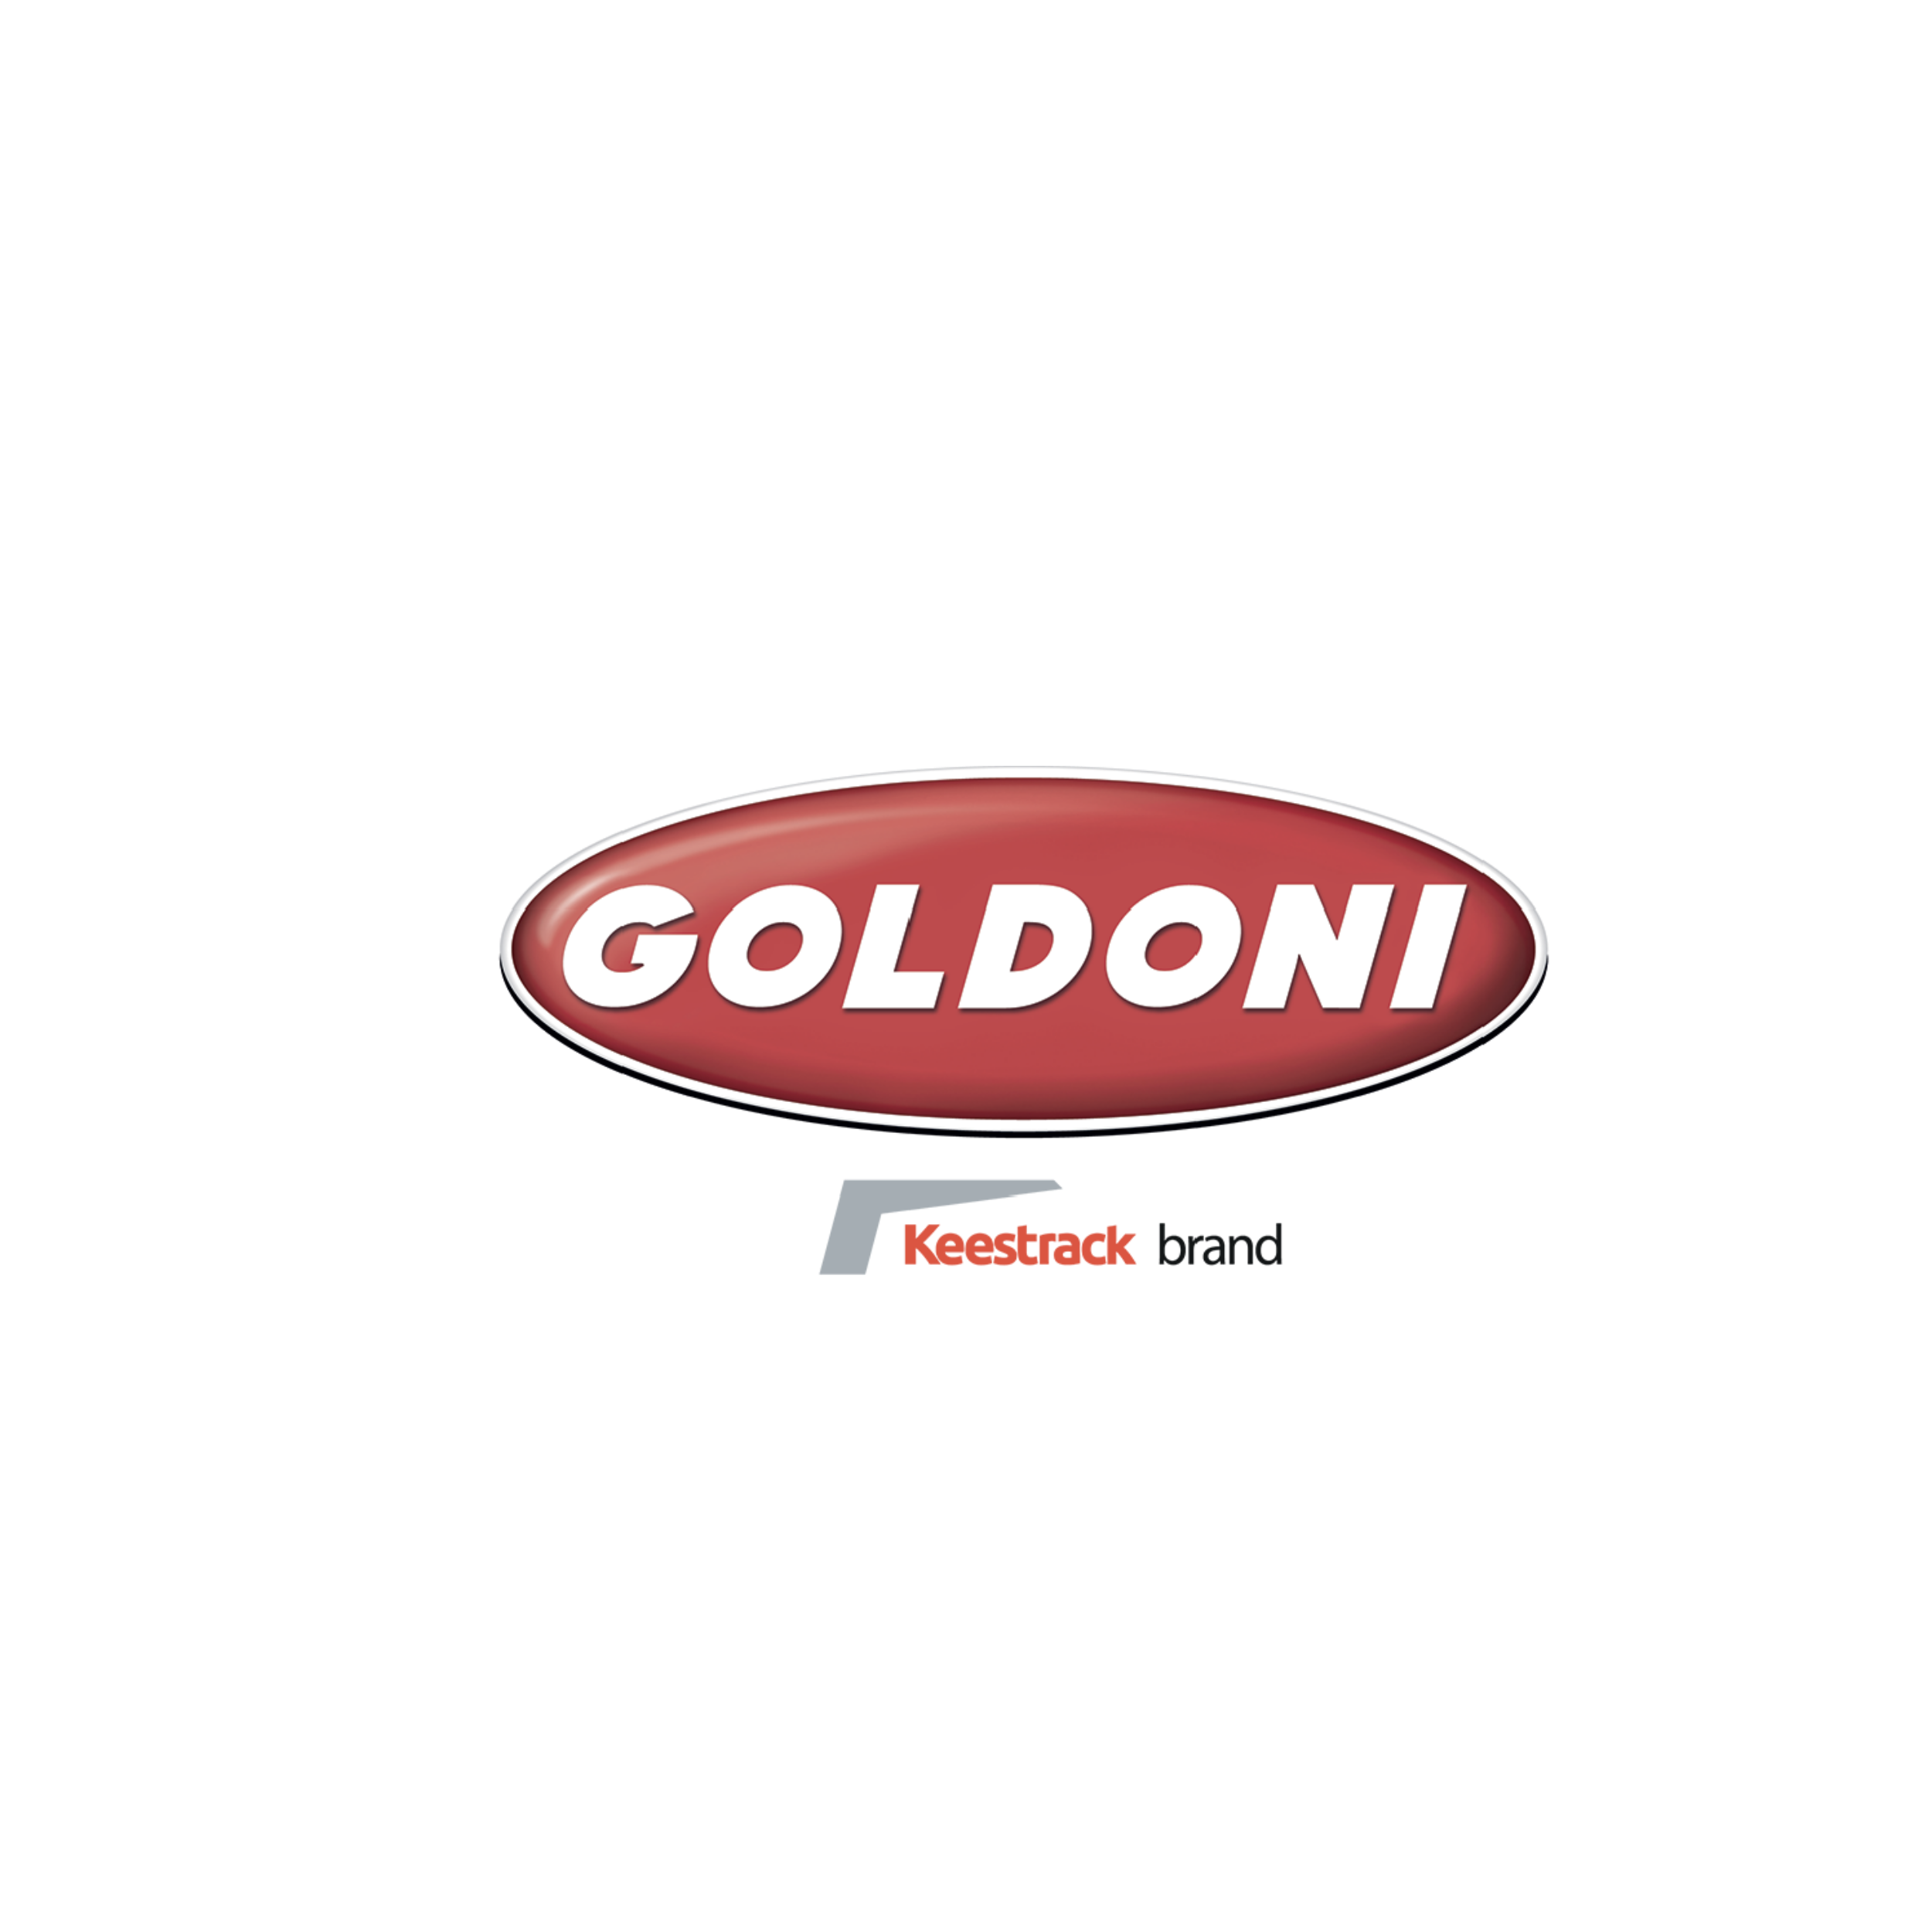 goldoni